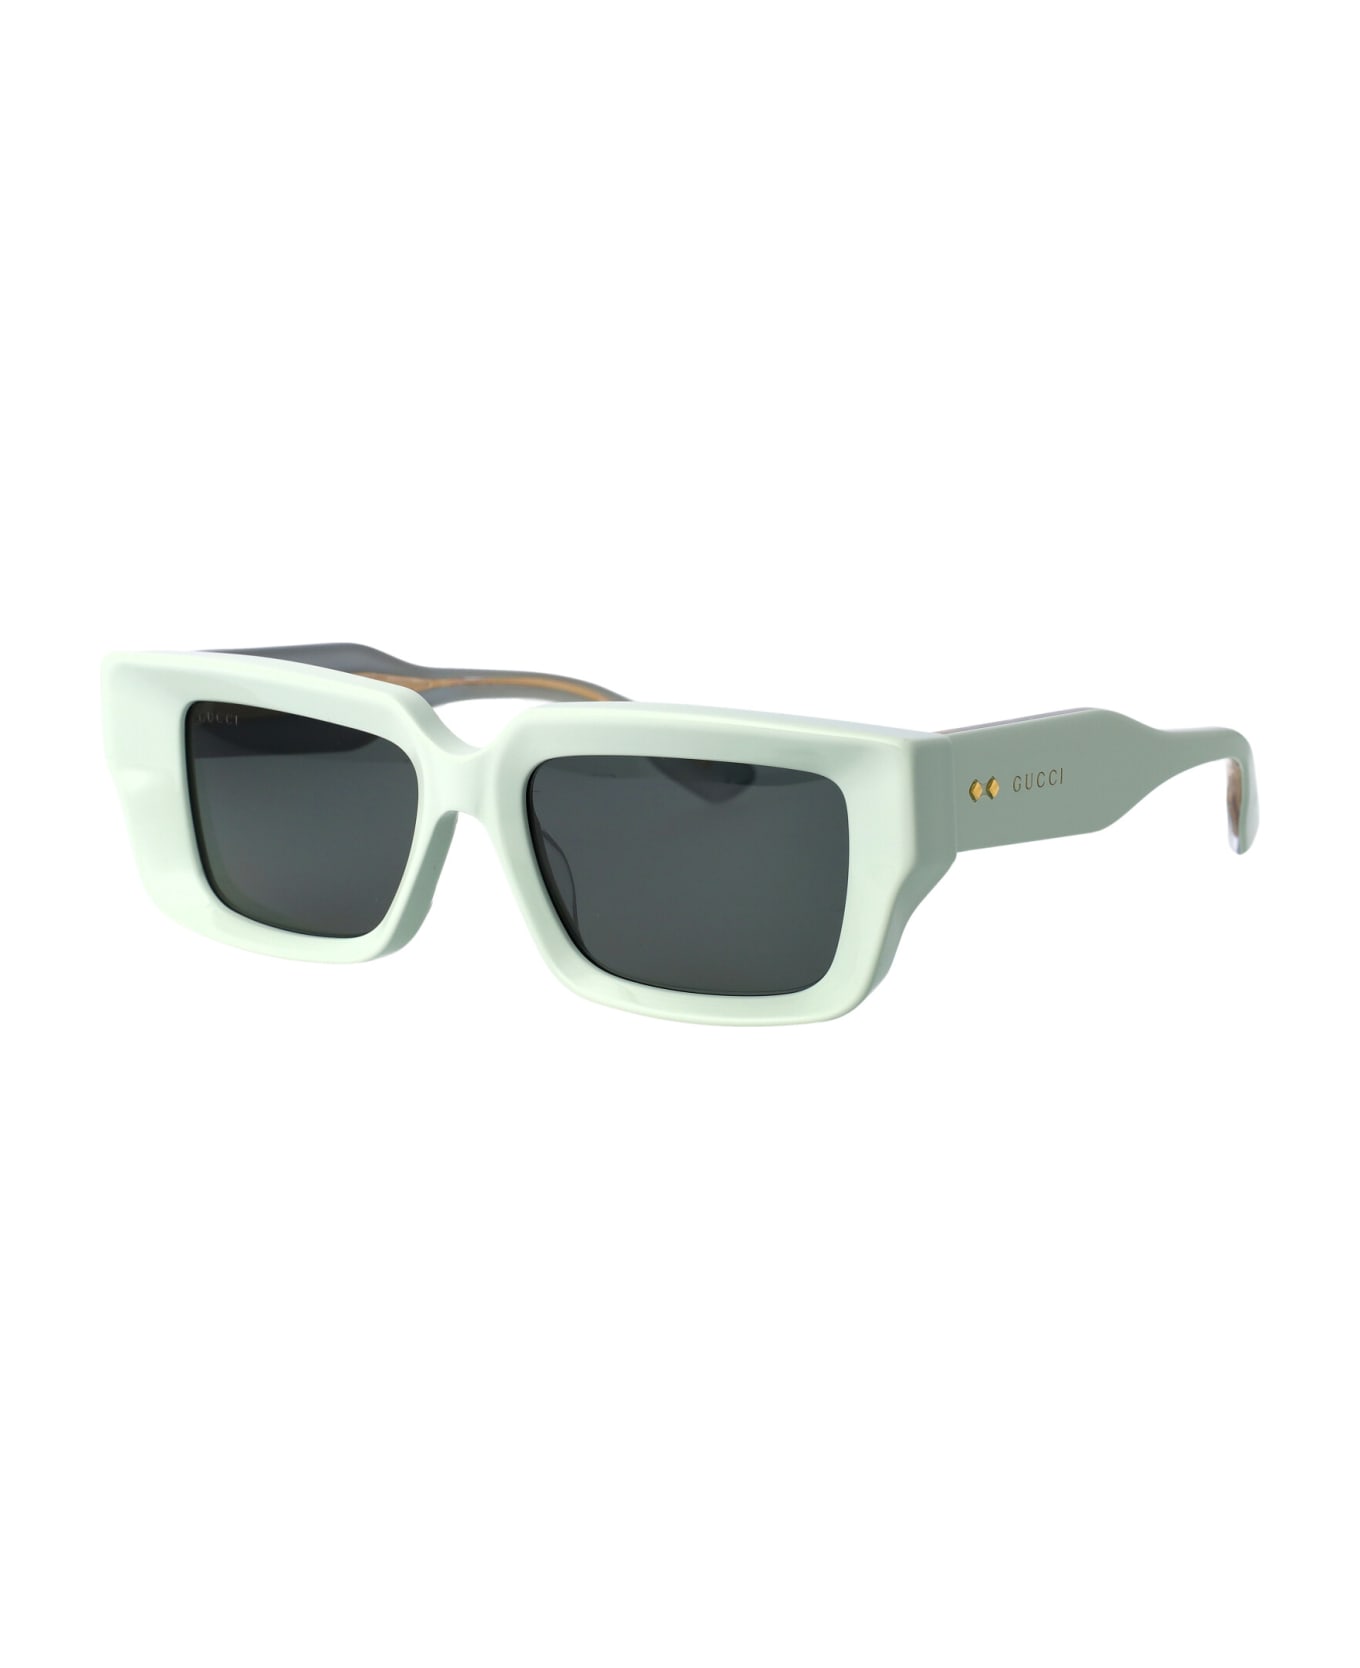 Gucci Eyewear Gg1529s Sunglasses - 003 GREEN GREEN GREY サングラス